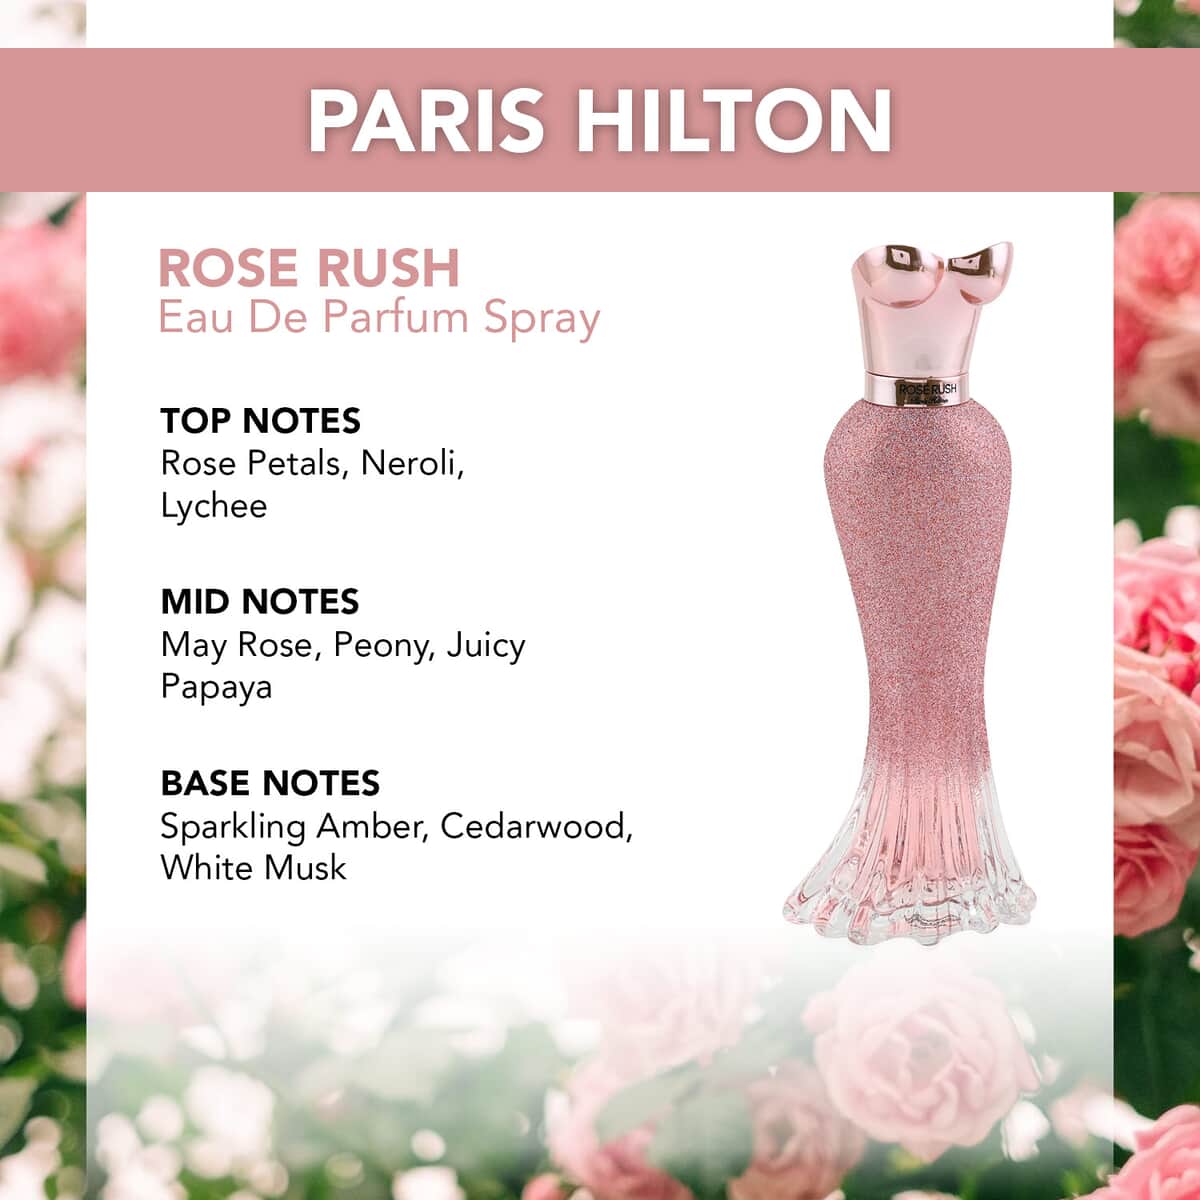 PARIS HILTON ROSE RUSH Eau De Parfum Spray 3.4 oz, Romantic Rose and Amber Scent image number 3